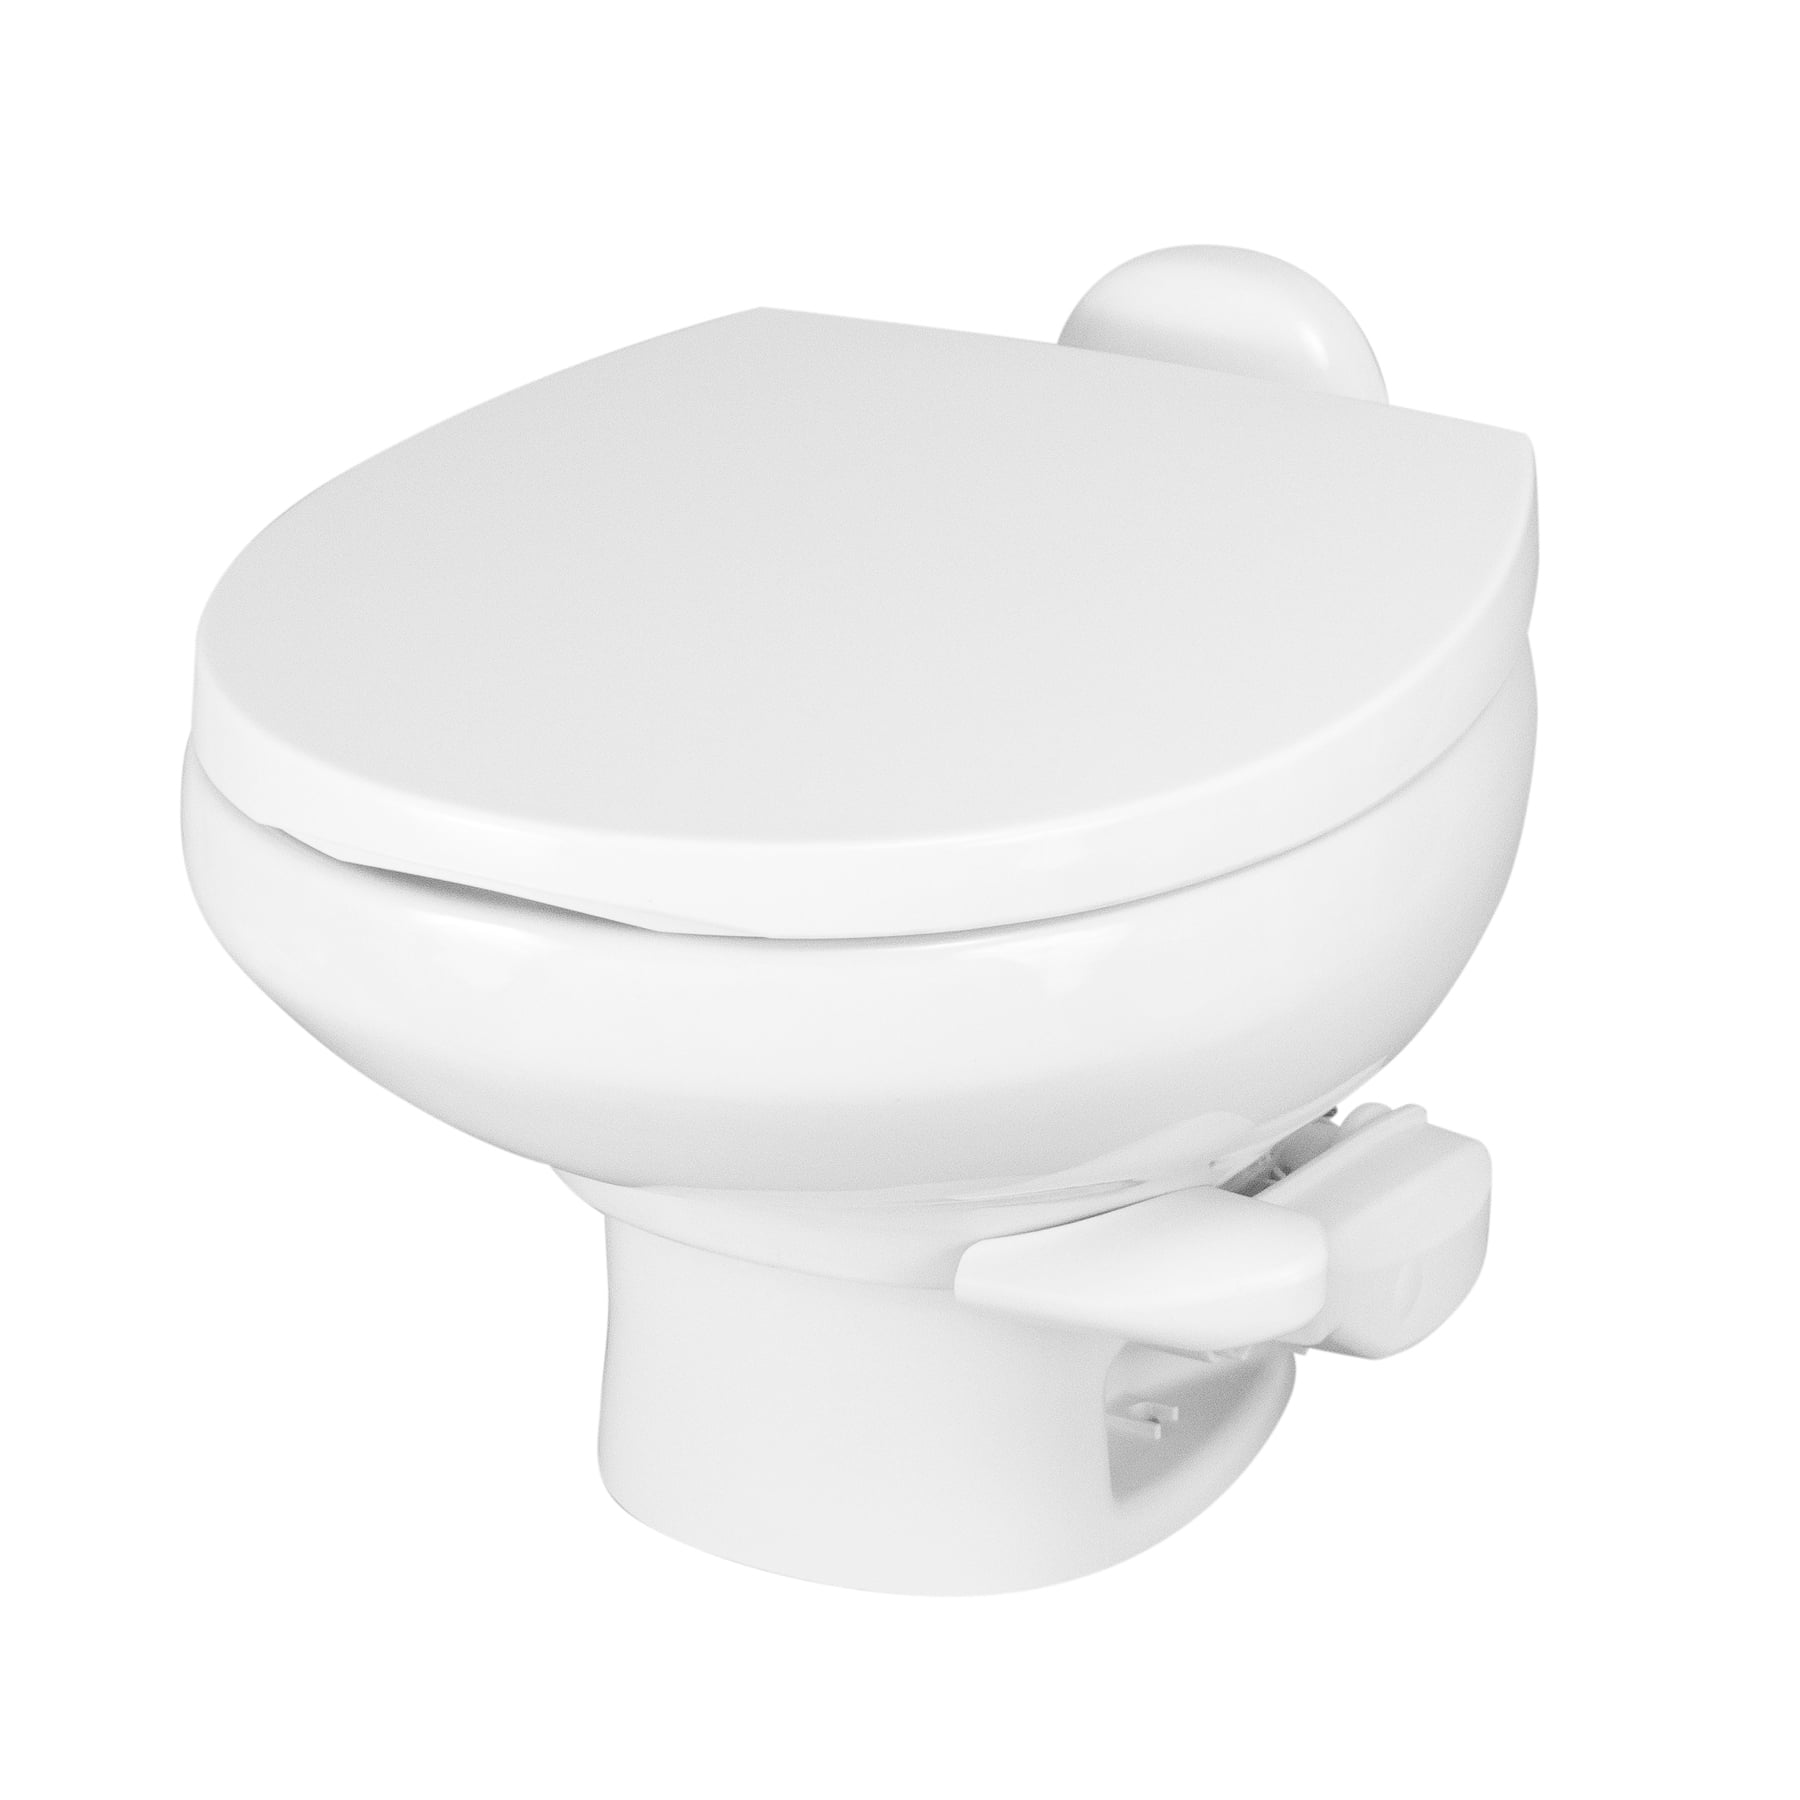 TINYSOME RV Toilet Seal, RV Toilet Gasket for Dometic300 Series Toilet  Replacement & 300 310 320 Series RV Toilet Flange Seal Kit 